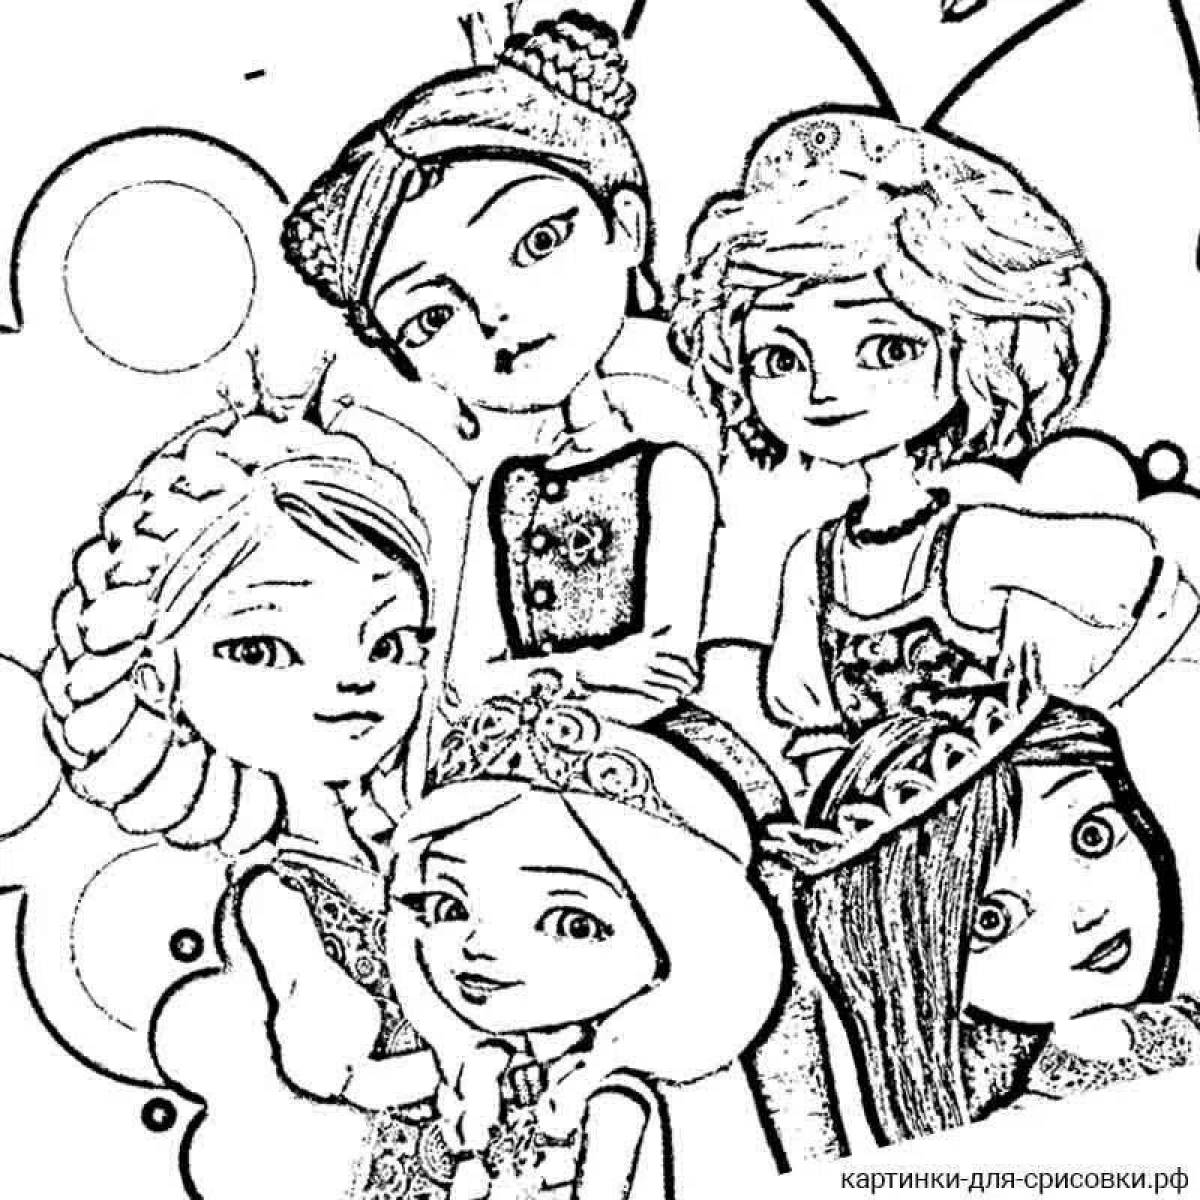 Fabulous alenka princess coloring book